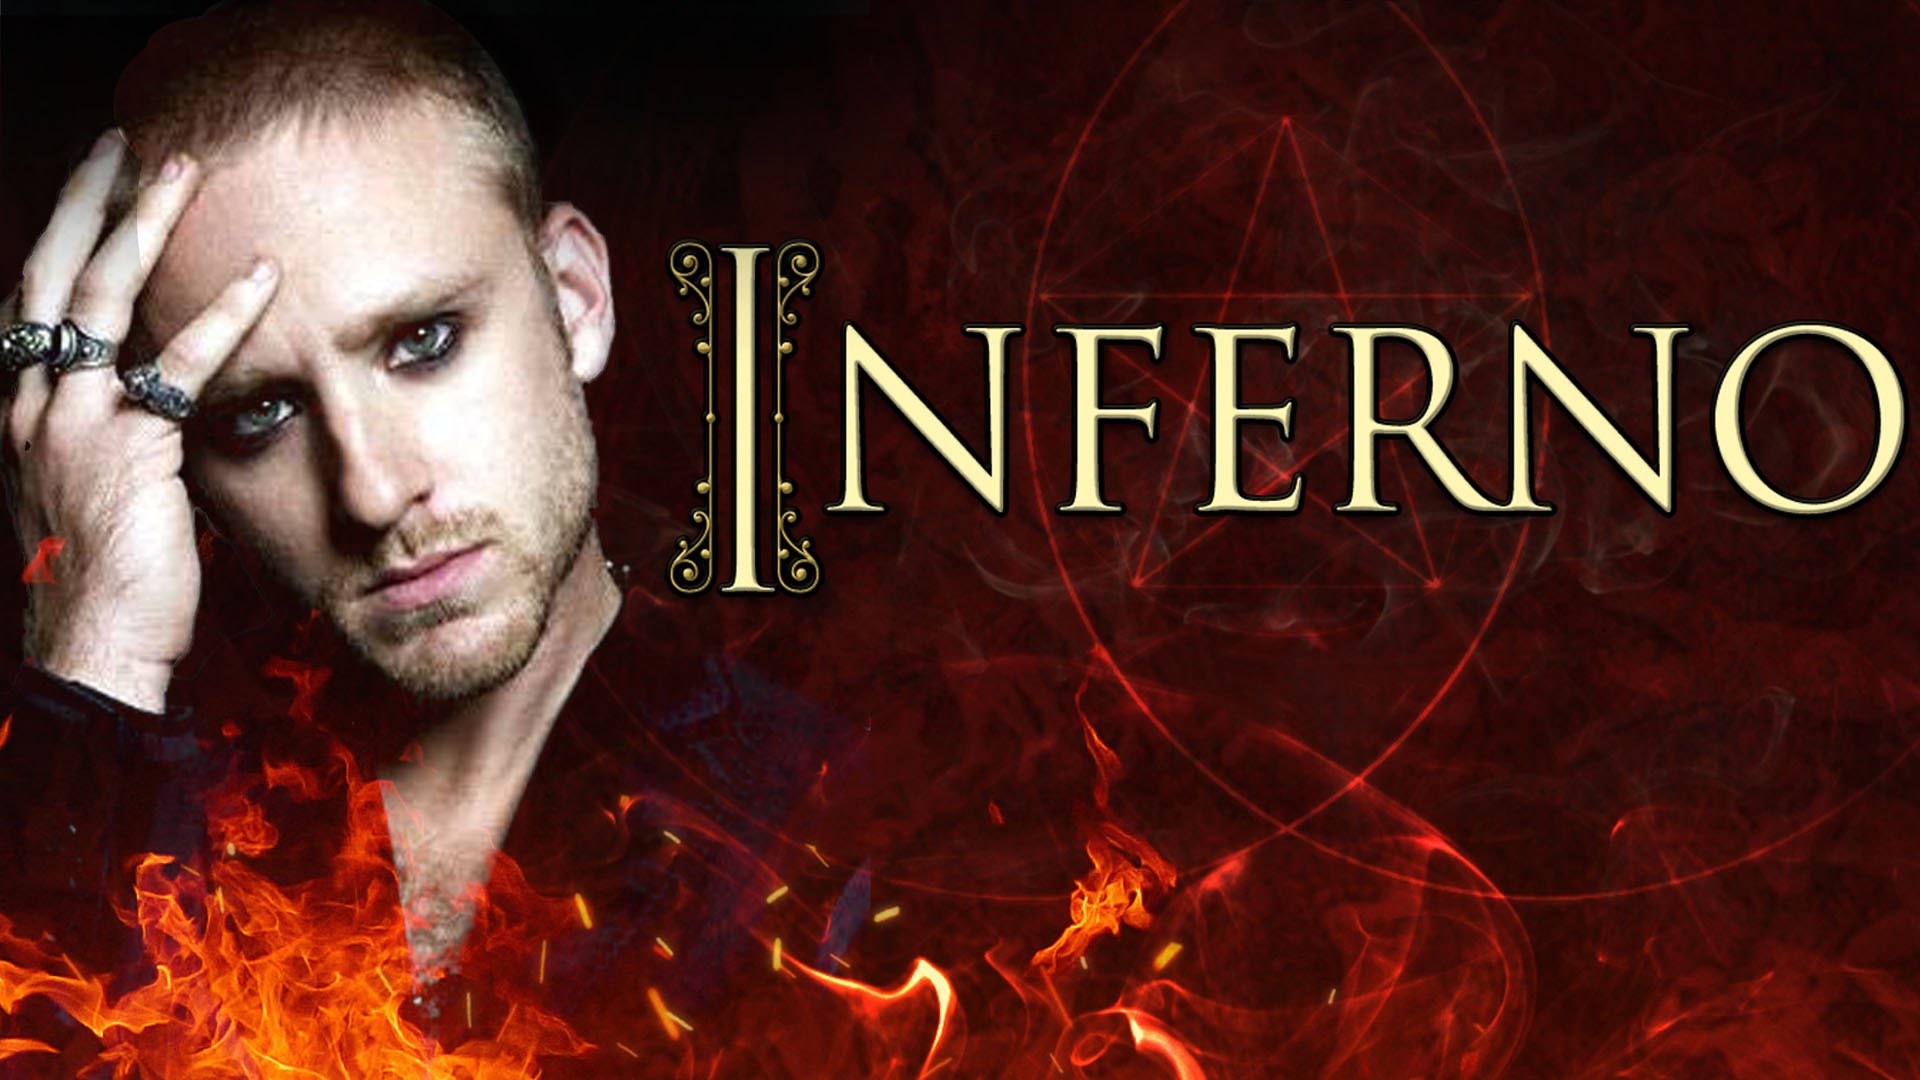 Movie Full-Length Online 2016 Inferno Watch